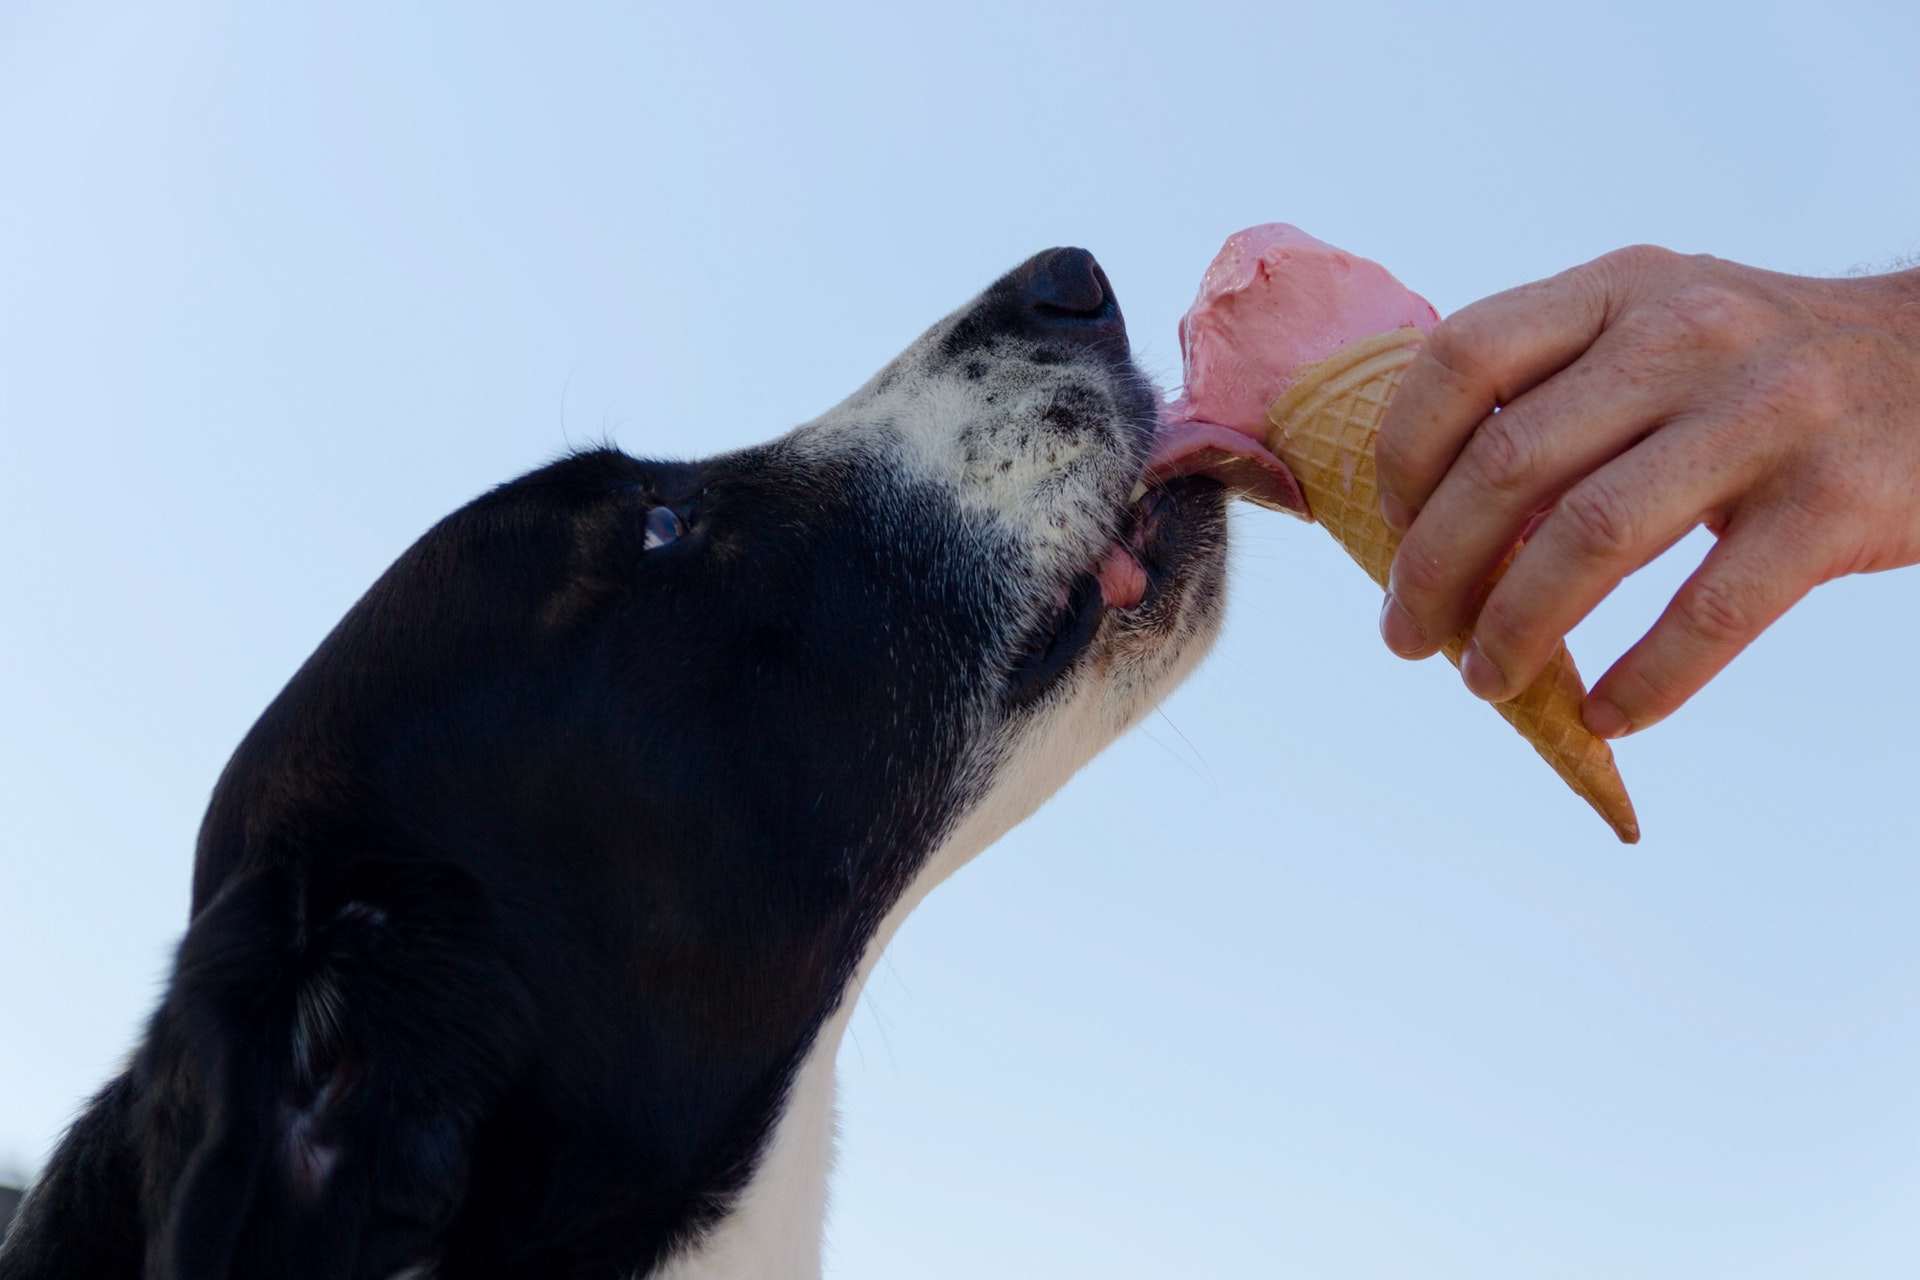 Dog with Ice Cream